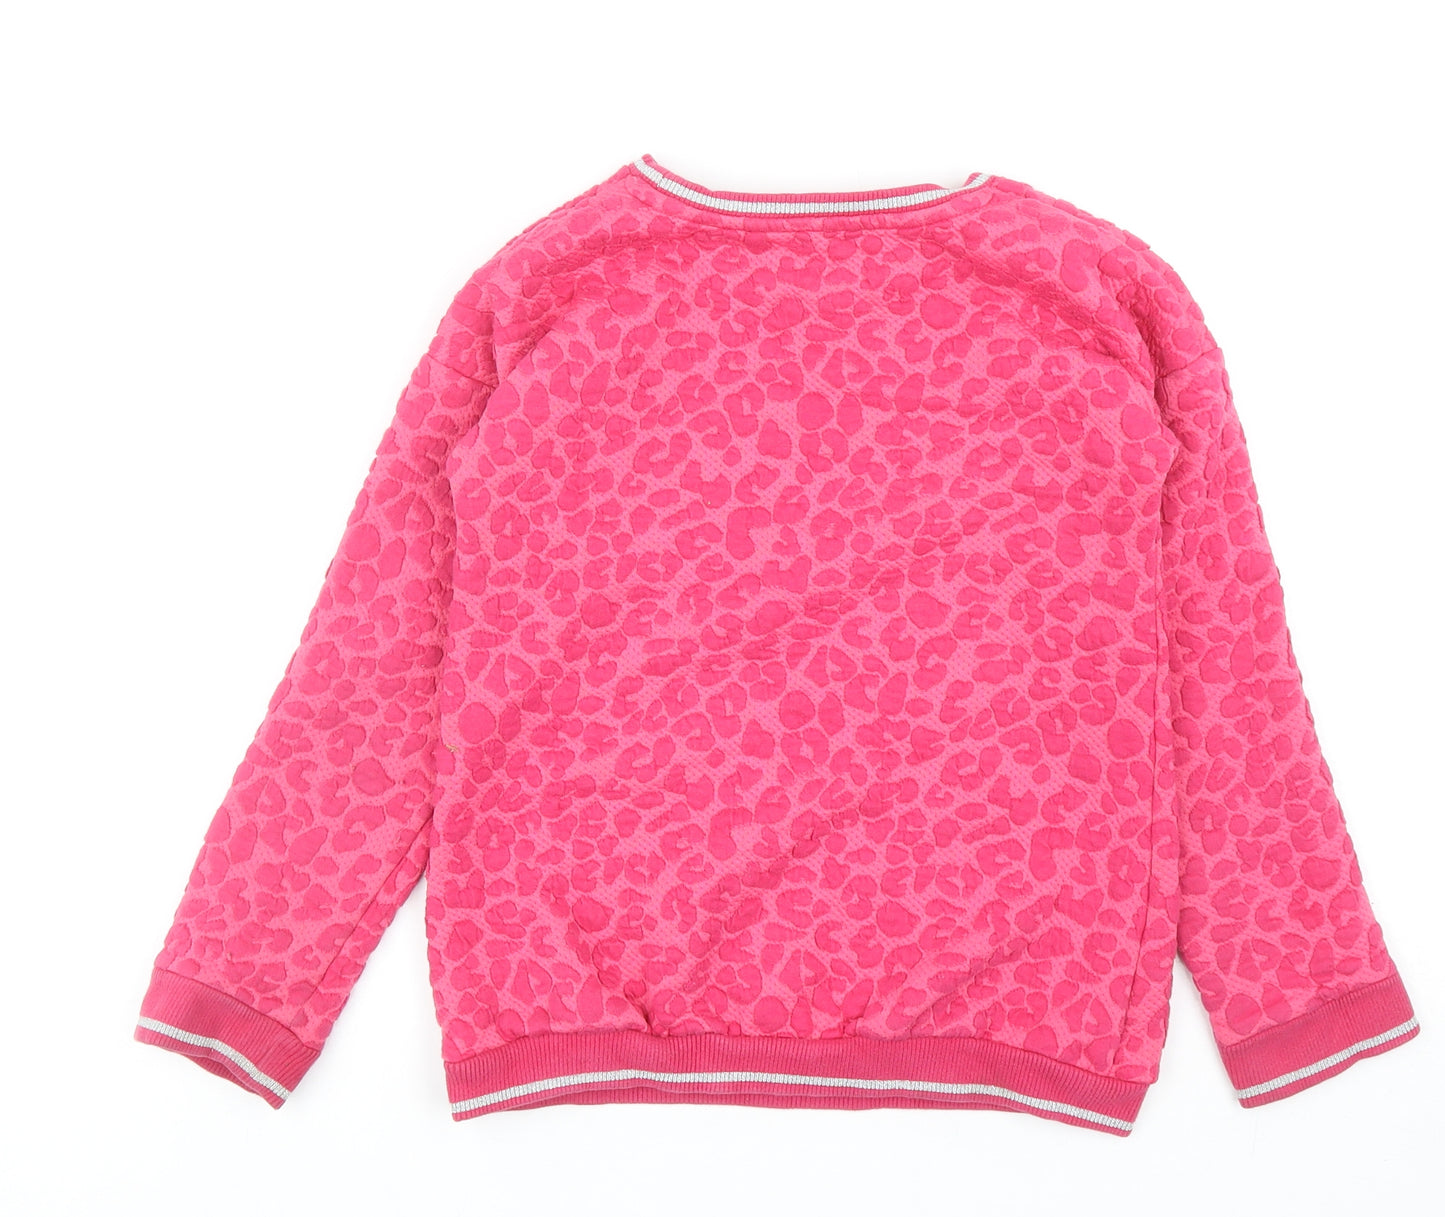 Nutmeg Girls Pink Animal Print Cotton Pullover Sweatshirt Size 9-10 Years Pullover - Textured Leopard Print